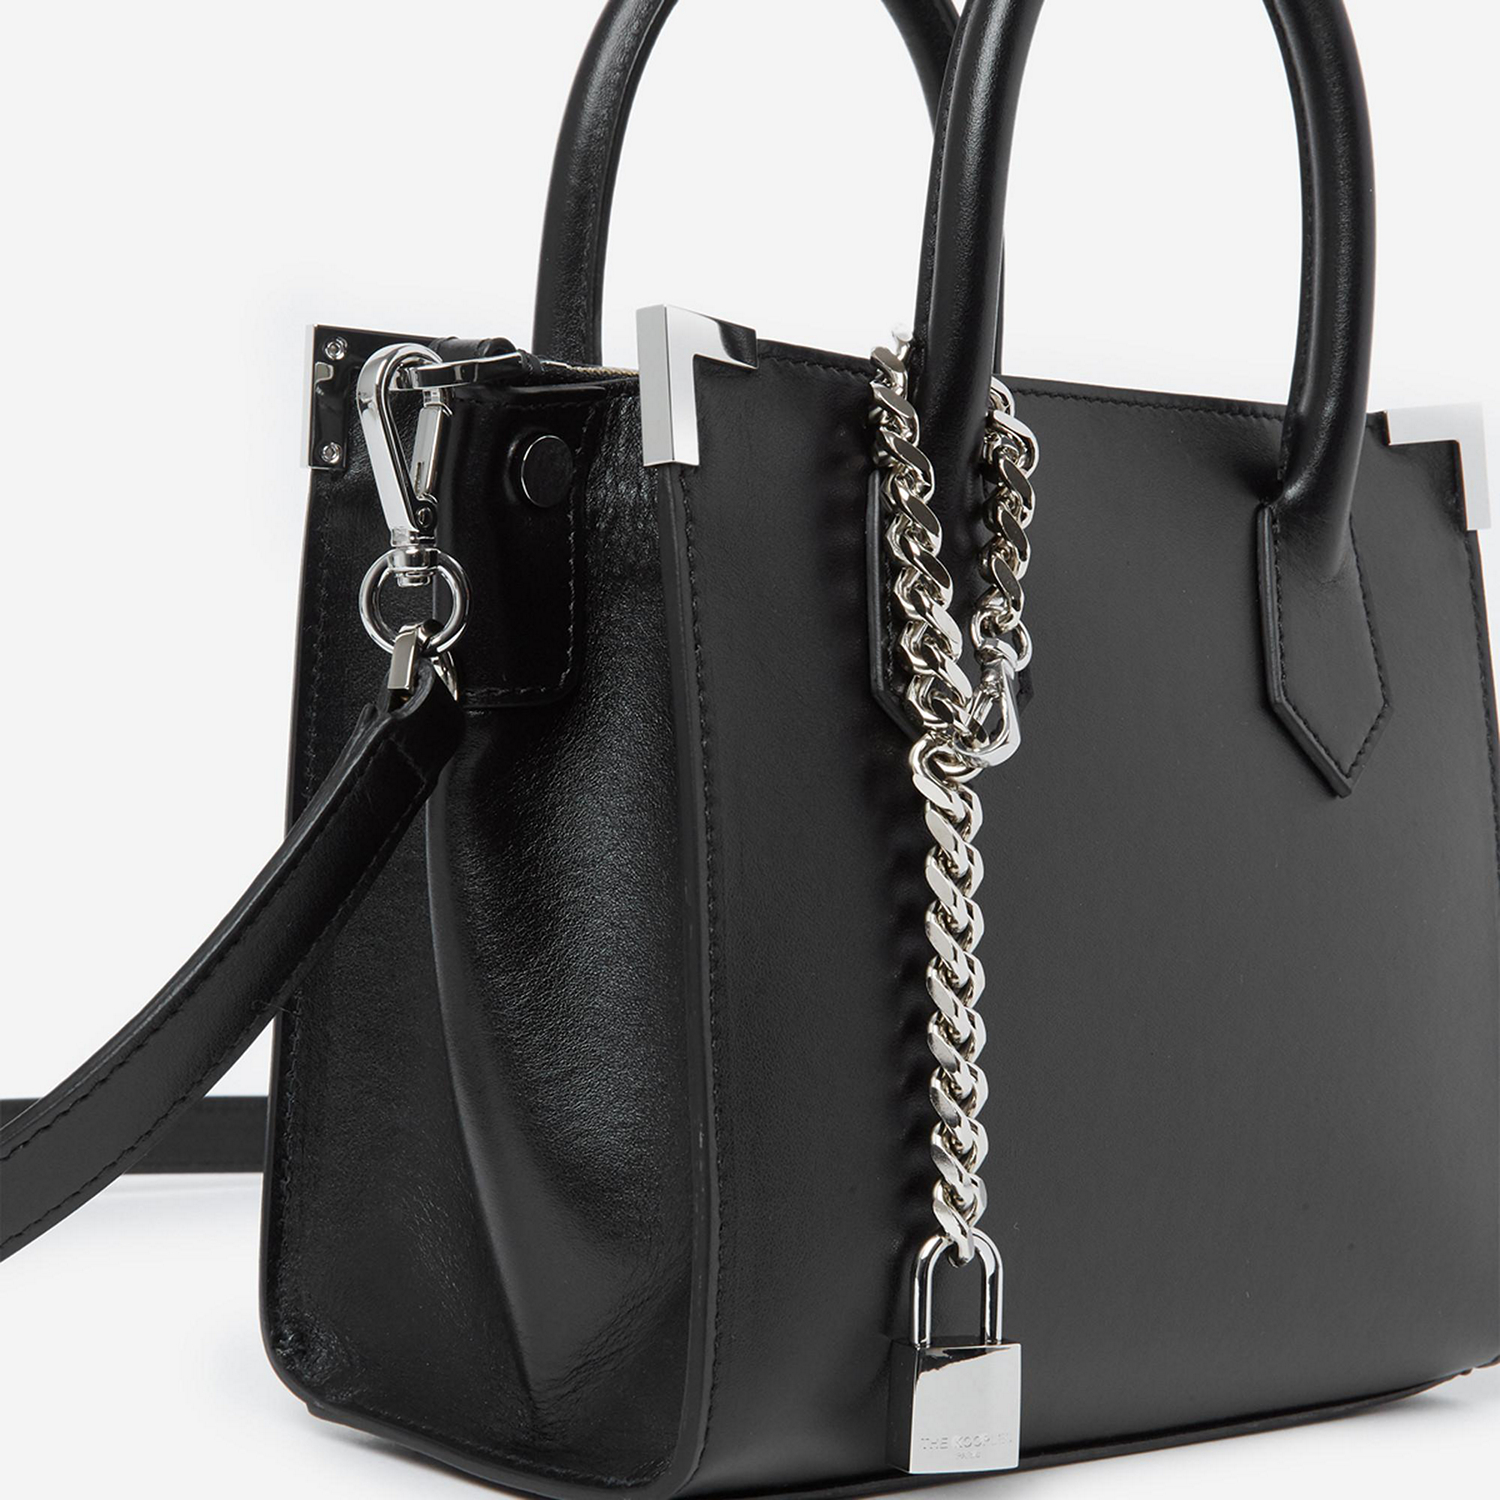 Ming Medium Smooth Leather Handbag